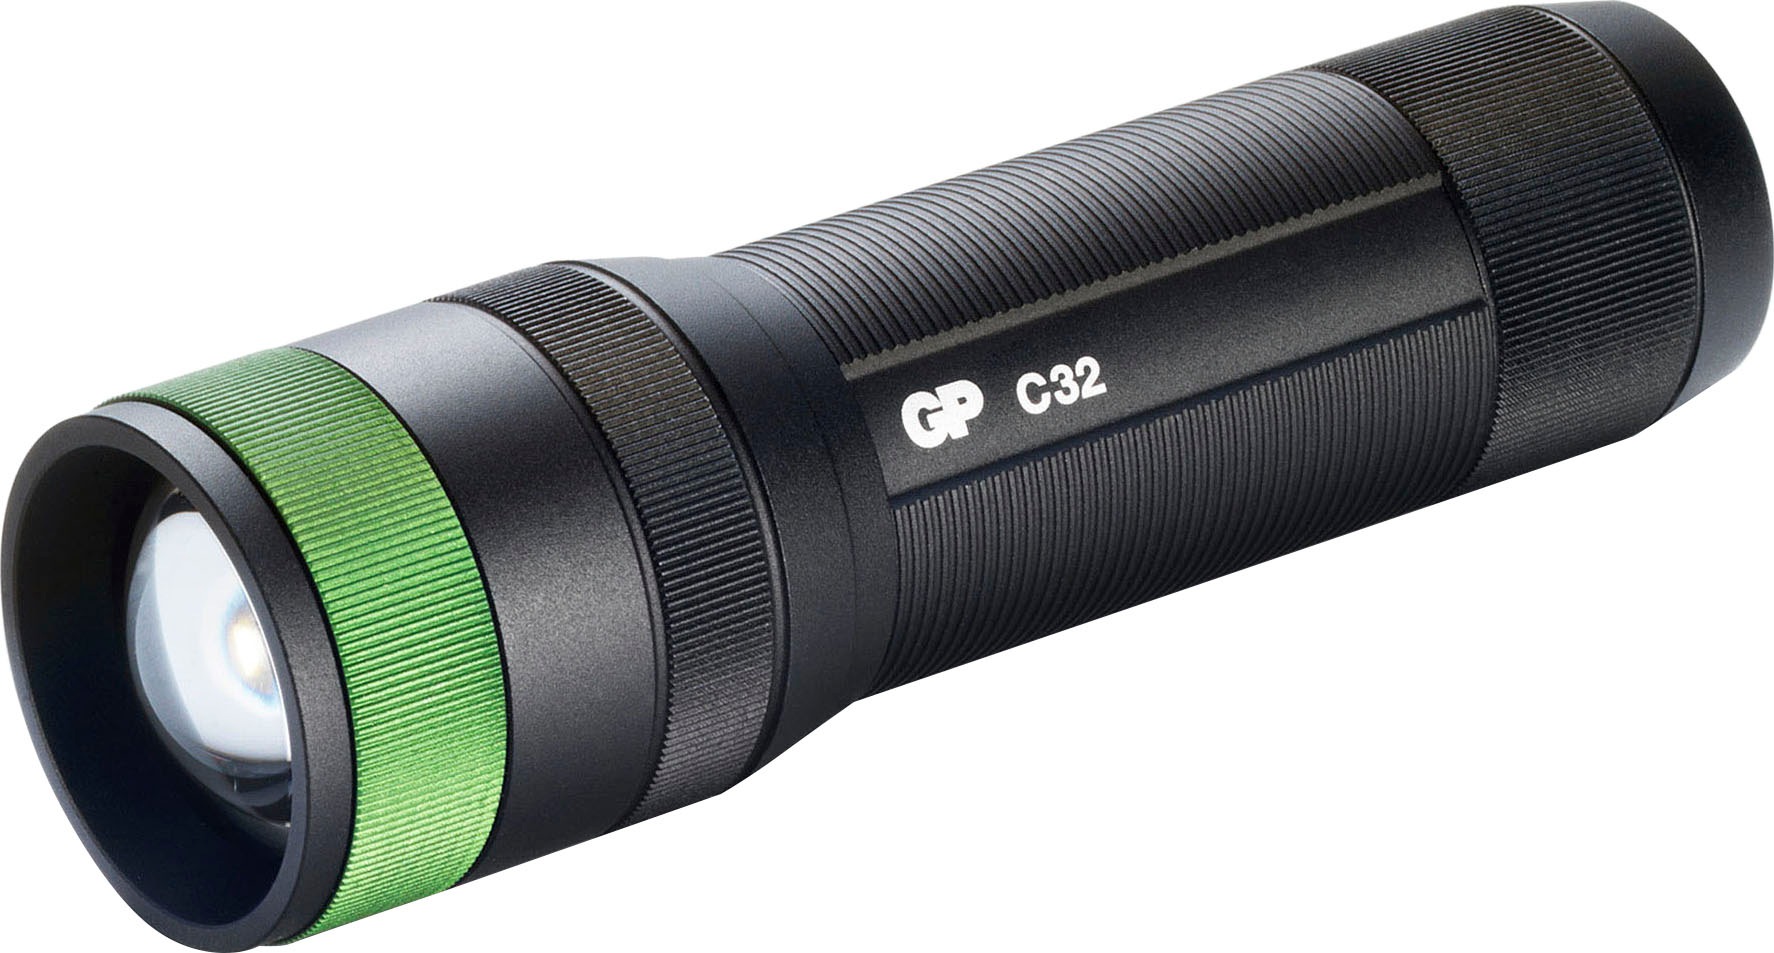 GP Batteries Taschenlampe »Discovery C32«, inkl. 3x AAA Batterie, Metallgehäuse,...